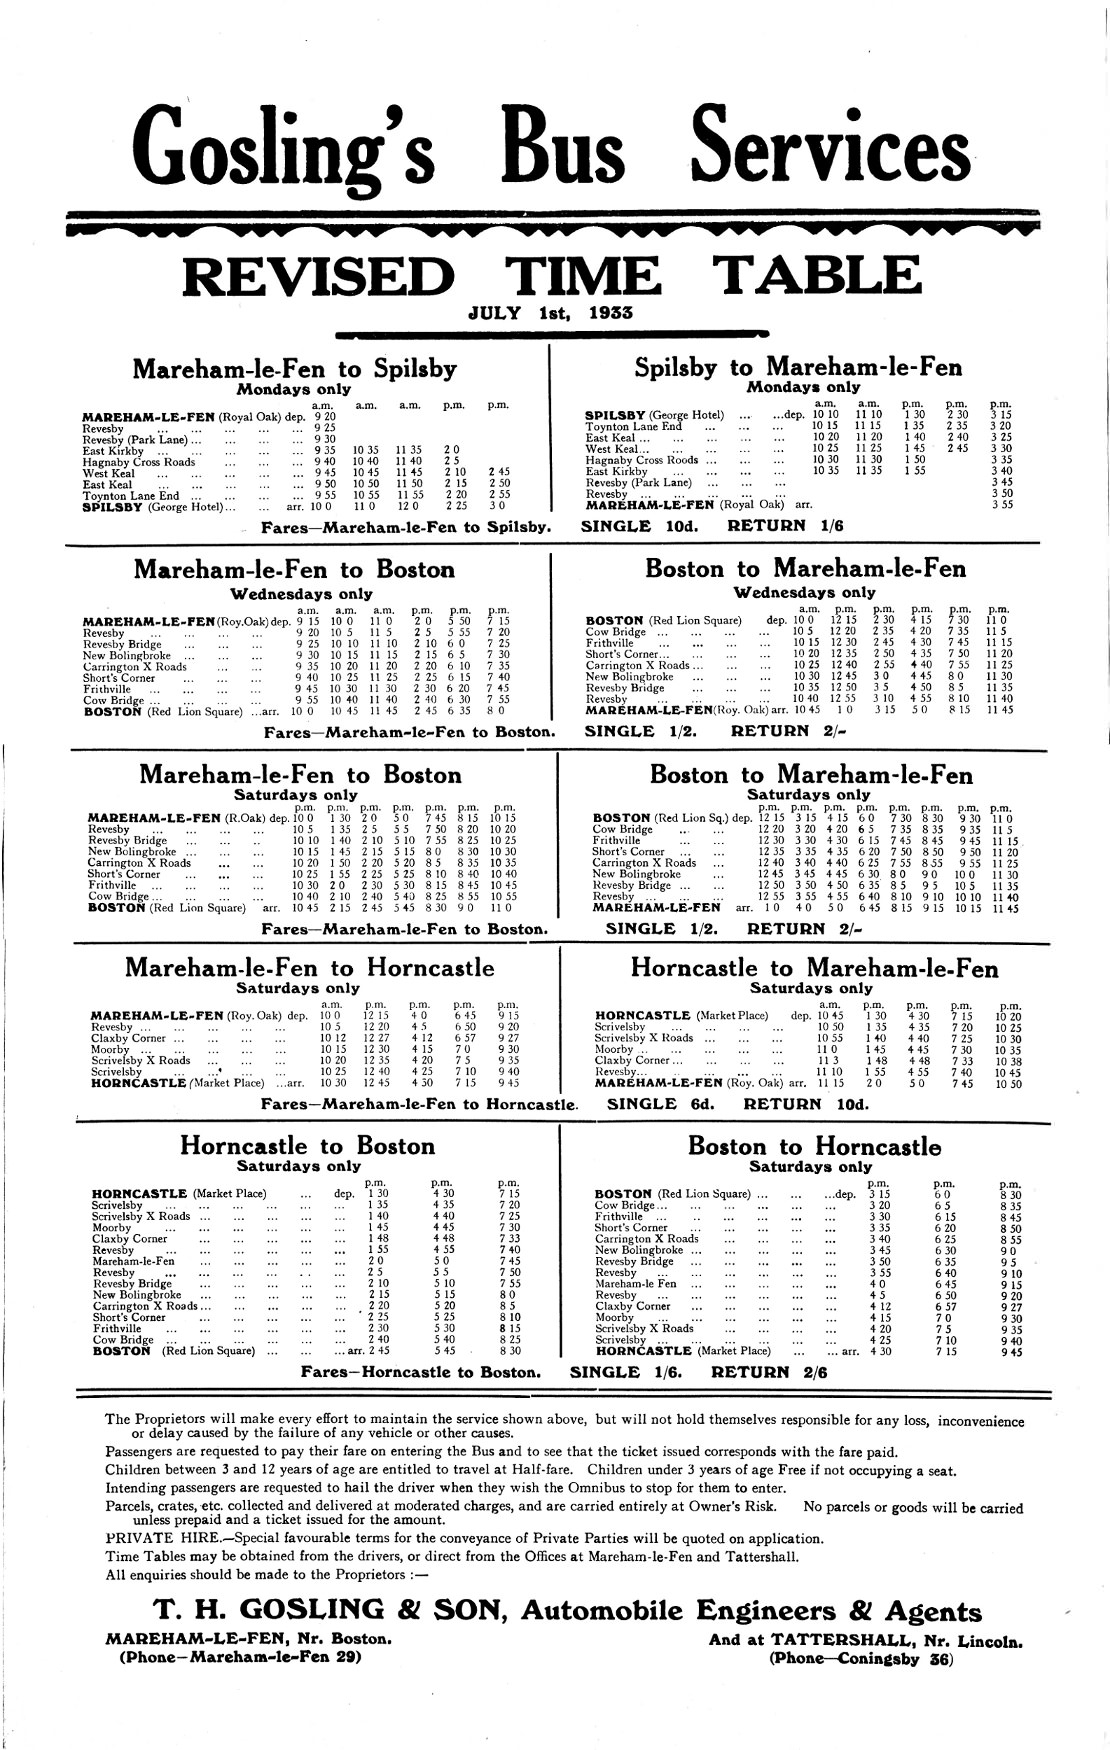 1933 timetable Gosling